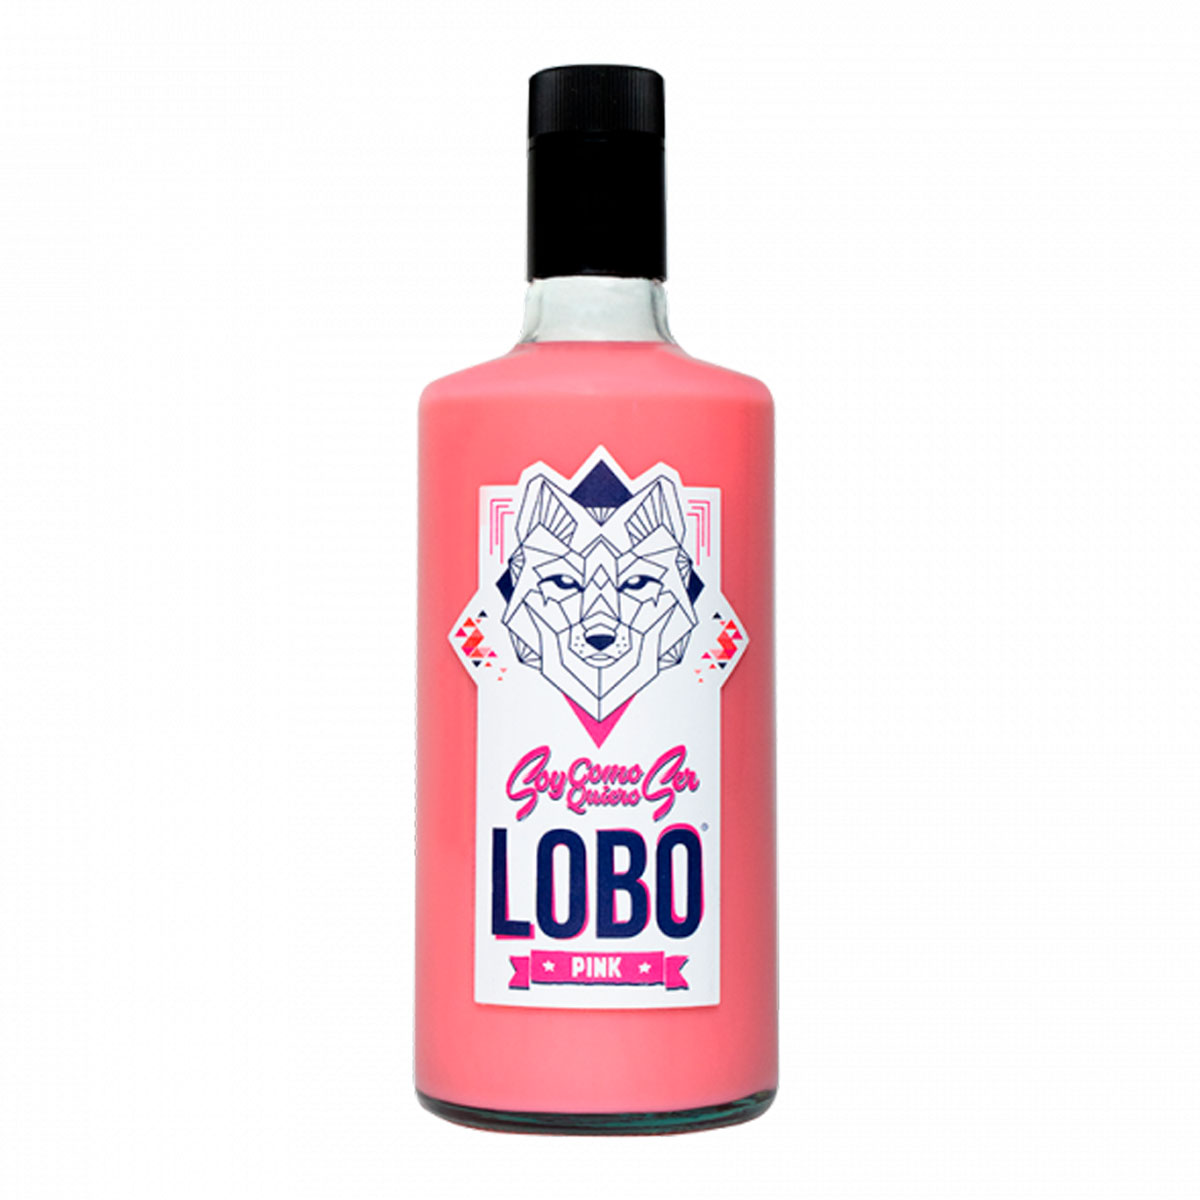 Lobo crema tequila fresa Pink (ágave) 70 cl